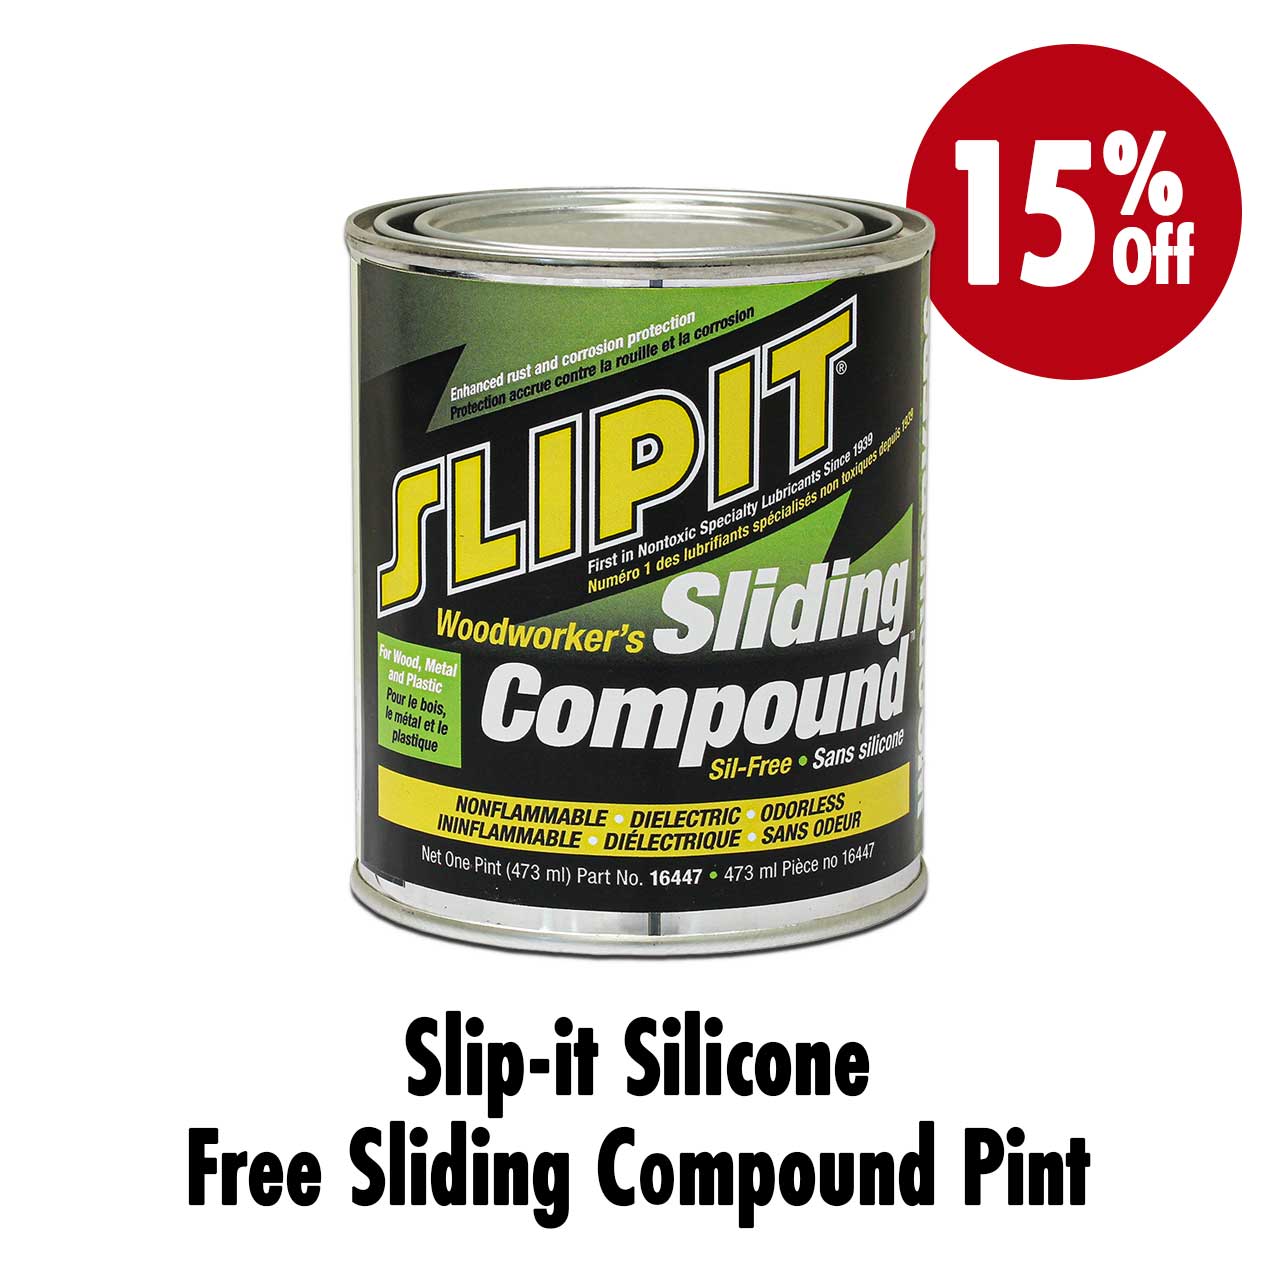 Slip-it Silicone Free Sliding Compound Pt.